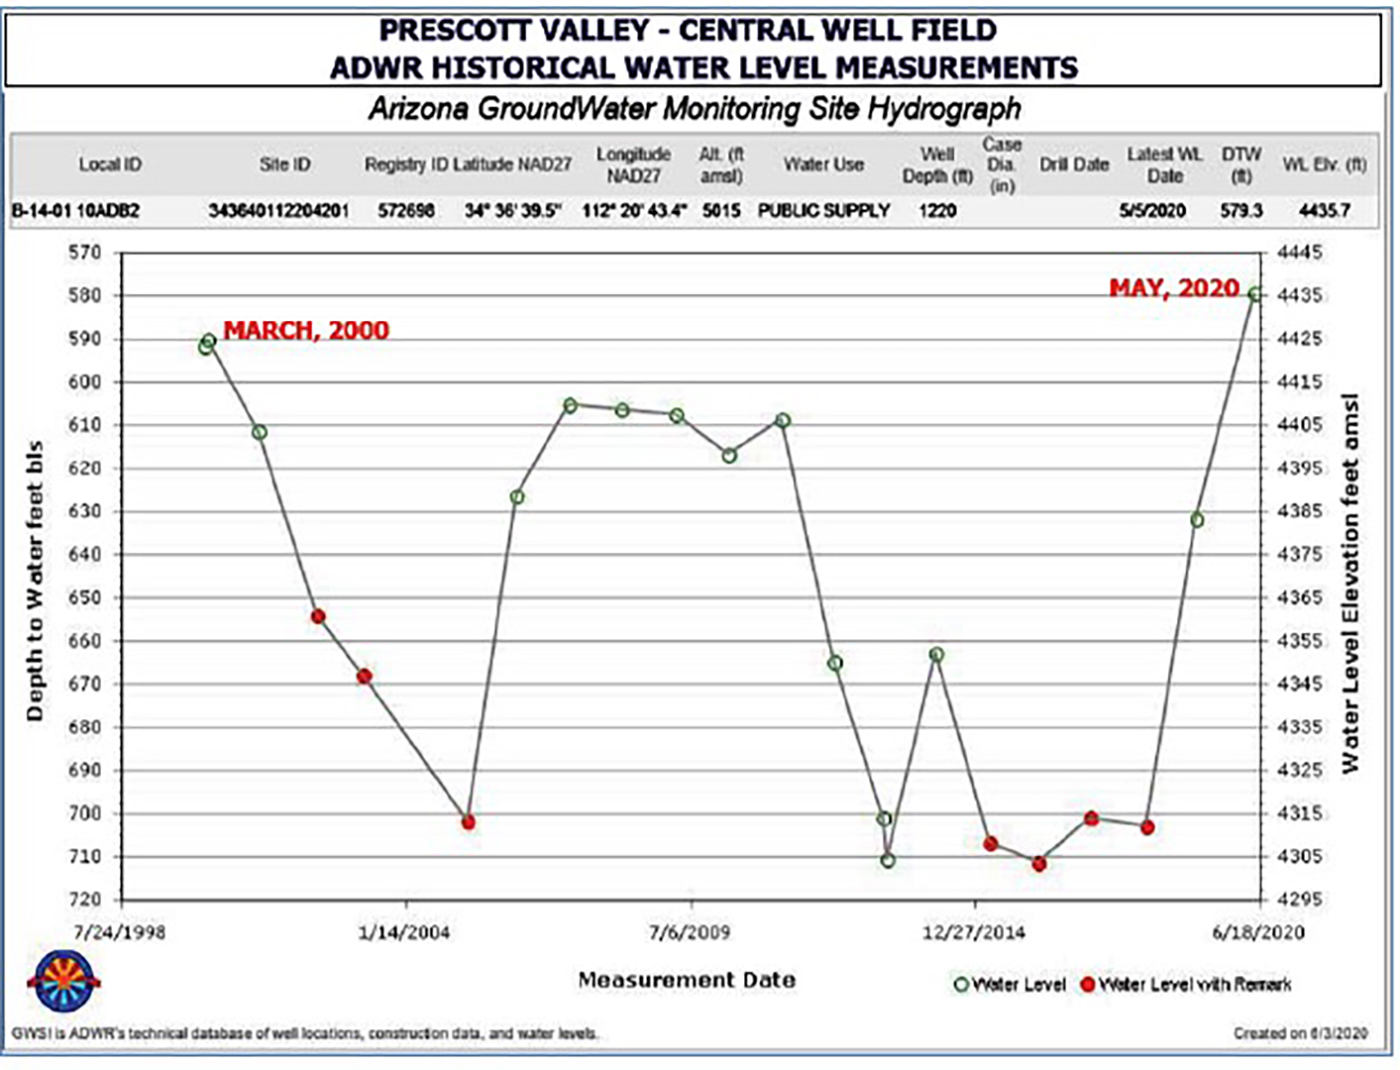 rest-period-restores-water-levels-in-prescott-valley-s-central-well